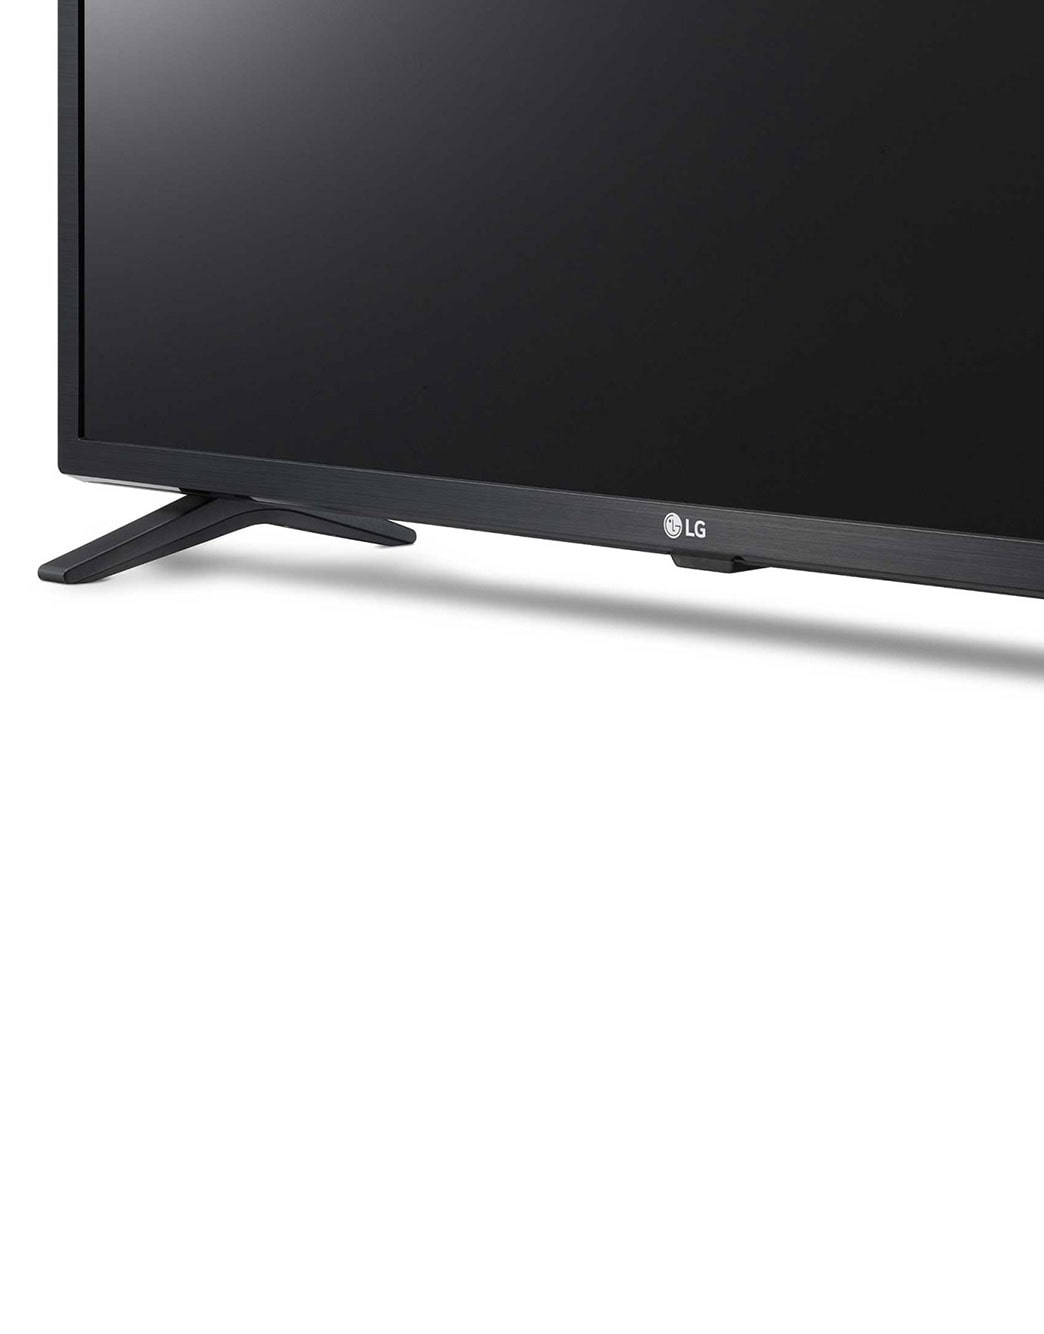 LG LED, 32 Inch, LM5500 Series, Full HD, Sleek & Slim Design, Active  HDR, WebOS, ThinQ